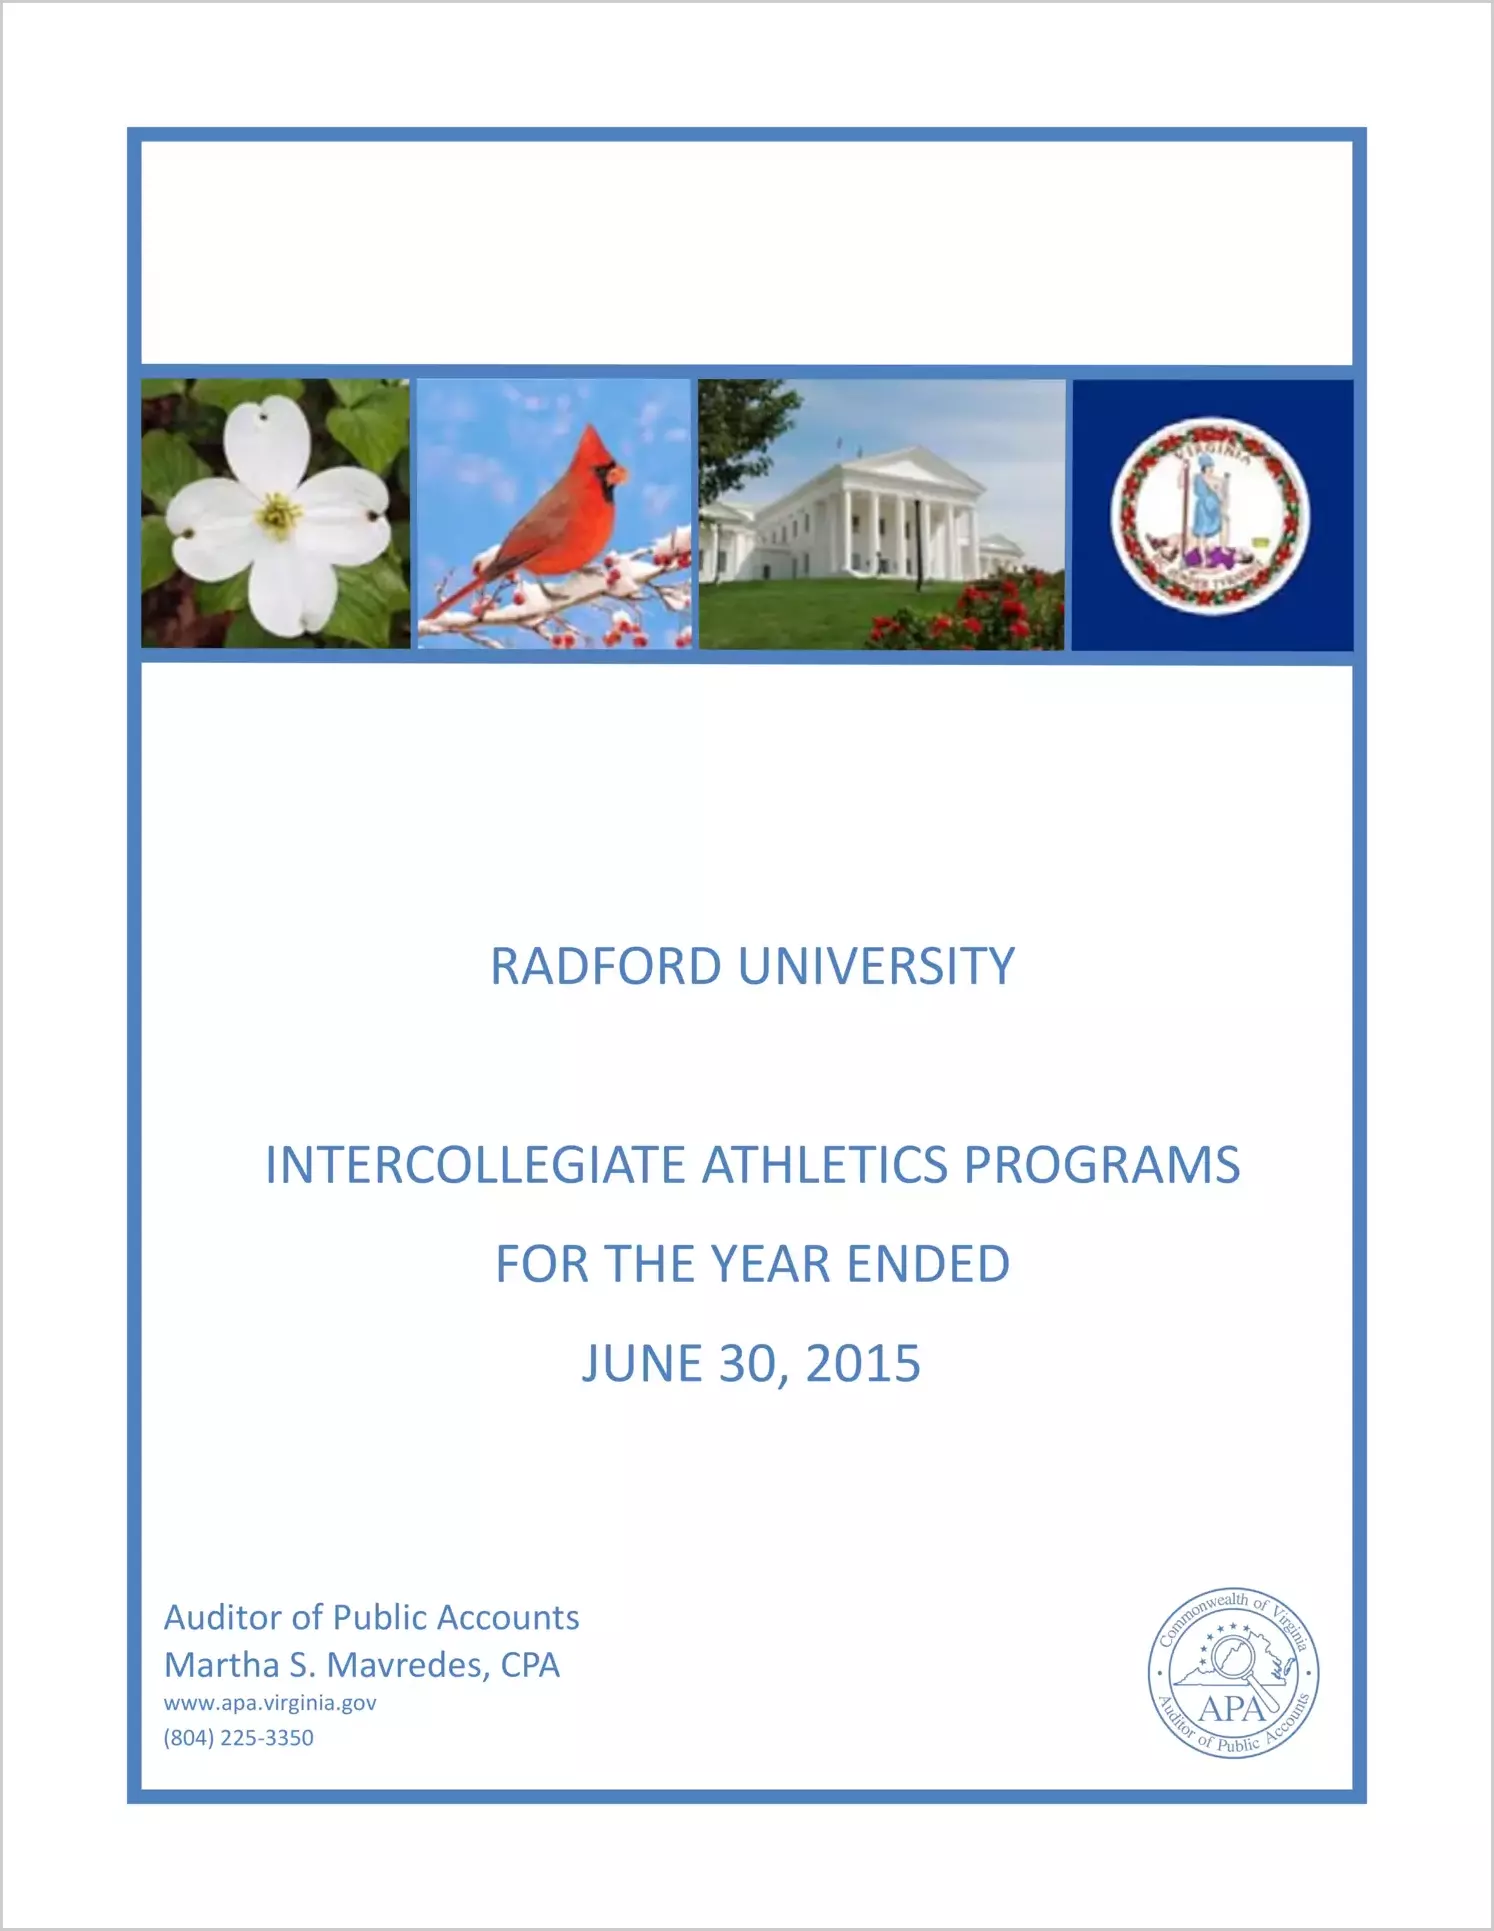 Radford University Intercollegiate Athletics Programs for the year ended June 30, 2015